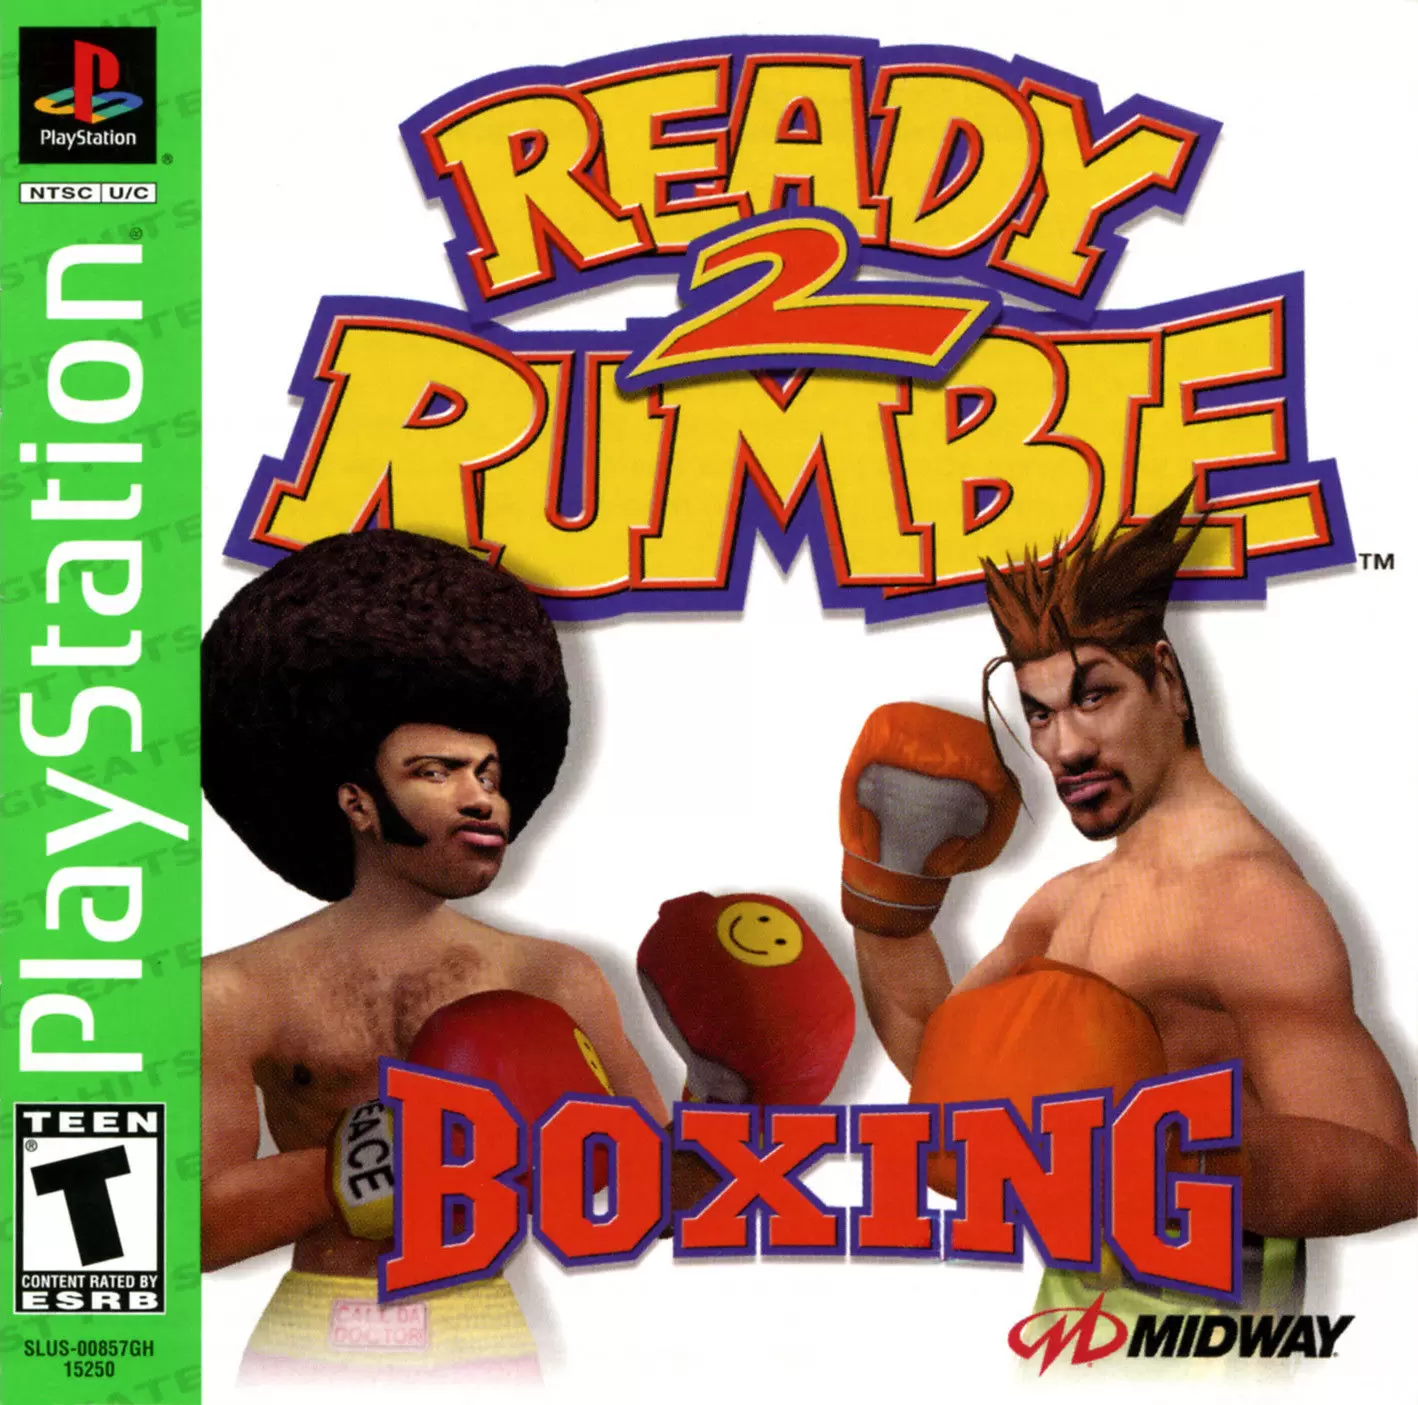 Playstation games - Ready 2 Rumble Boxing